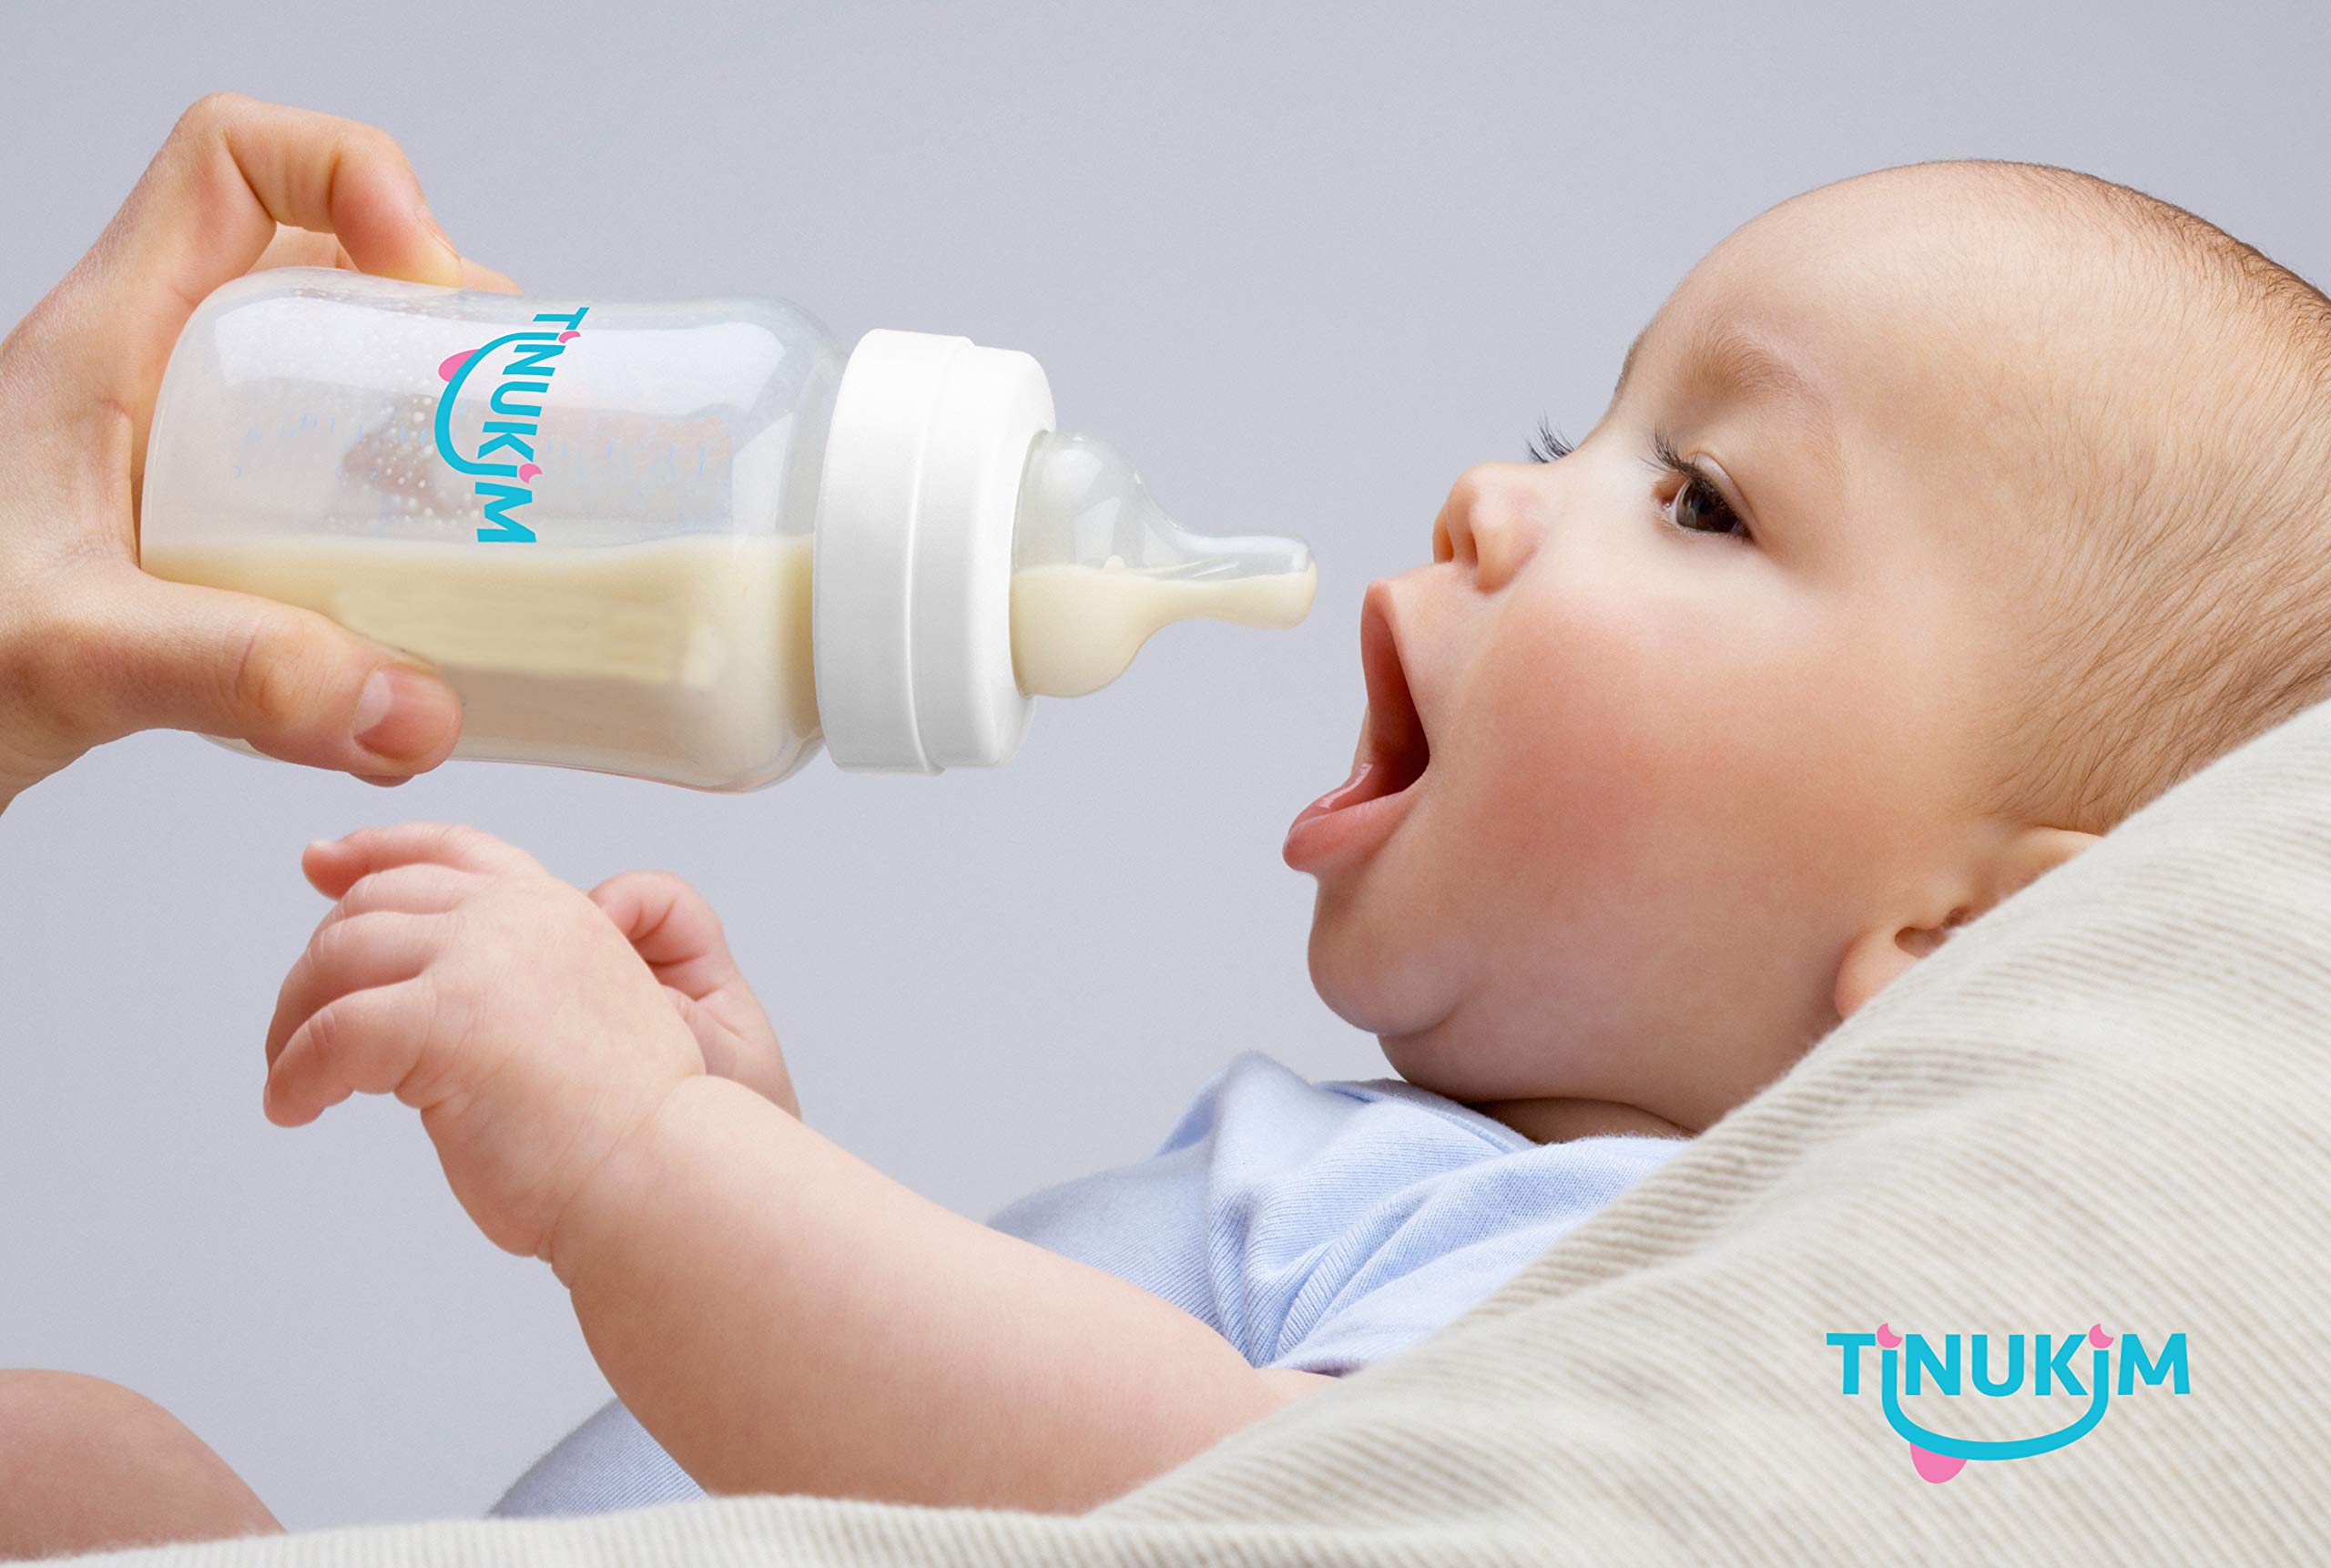 Tinukim iFeed 4 Ounce Self Feeding Baby Bottle with Tube - Handless Anti-Colic Nursing System, White - 2-Pack